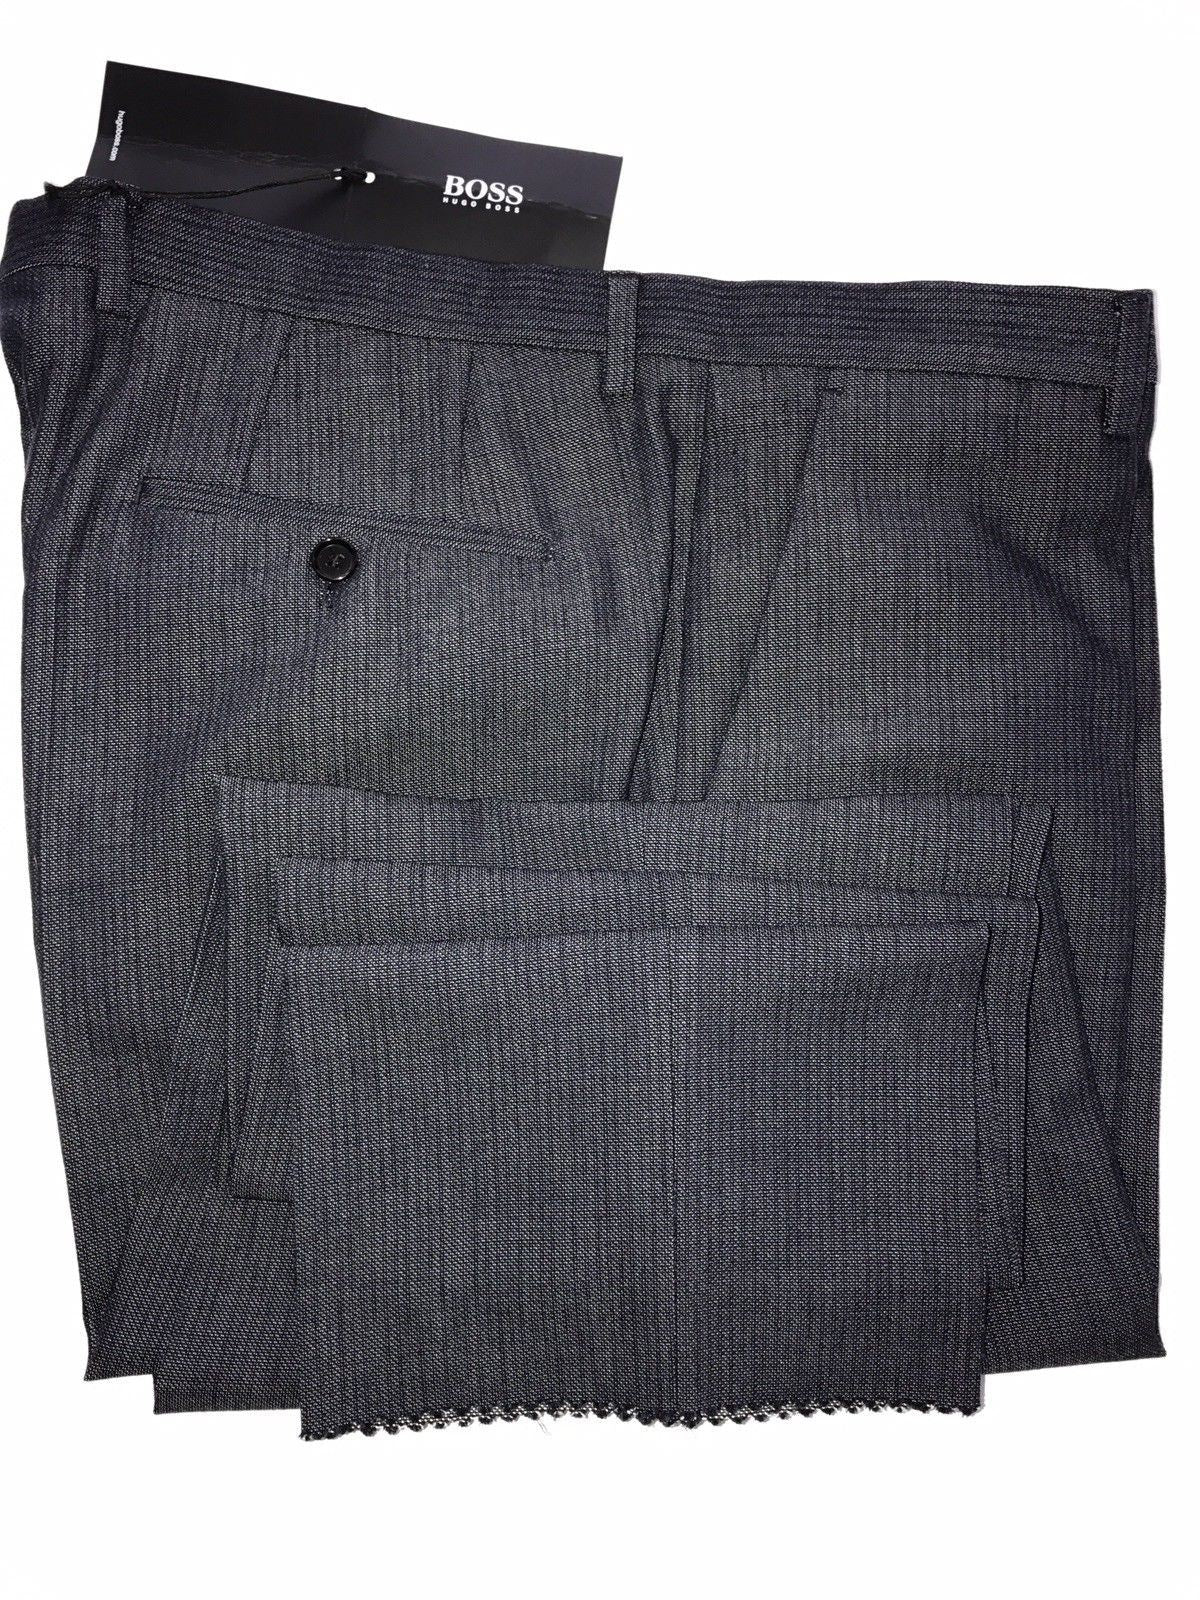 NWT $255 Boss Hugo Boss Central Mens Navy Dress Pants Size 32R US